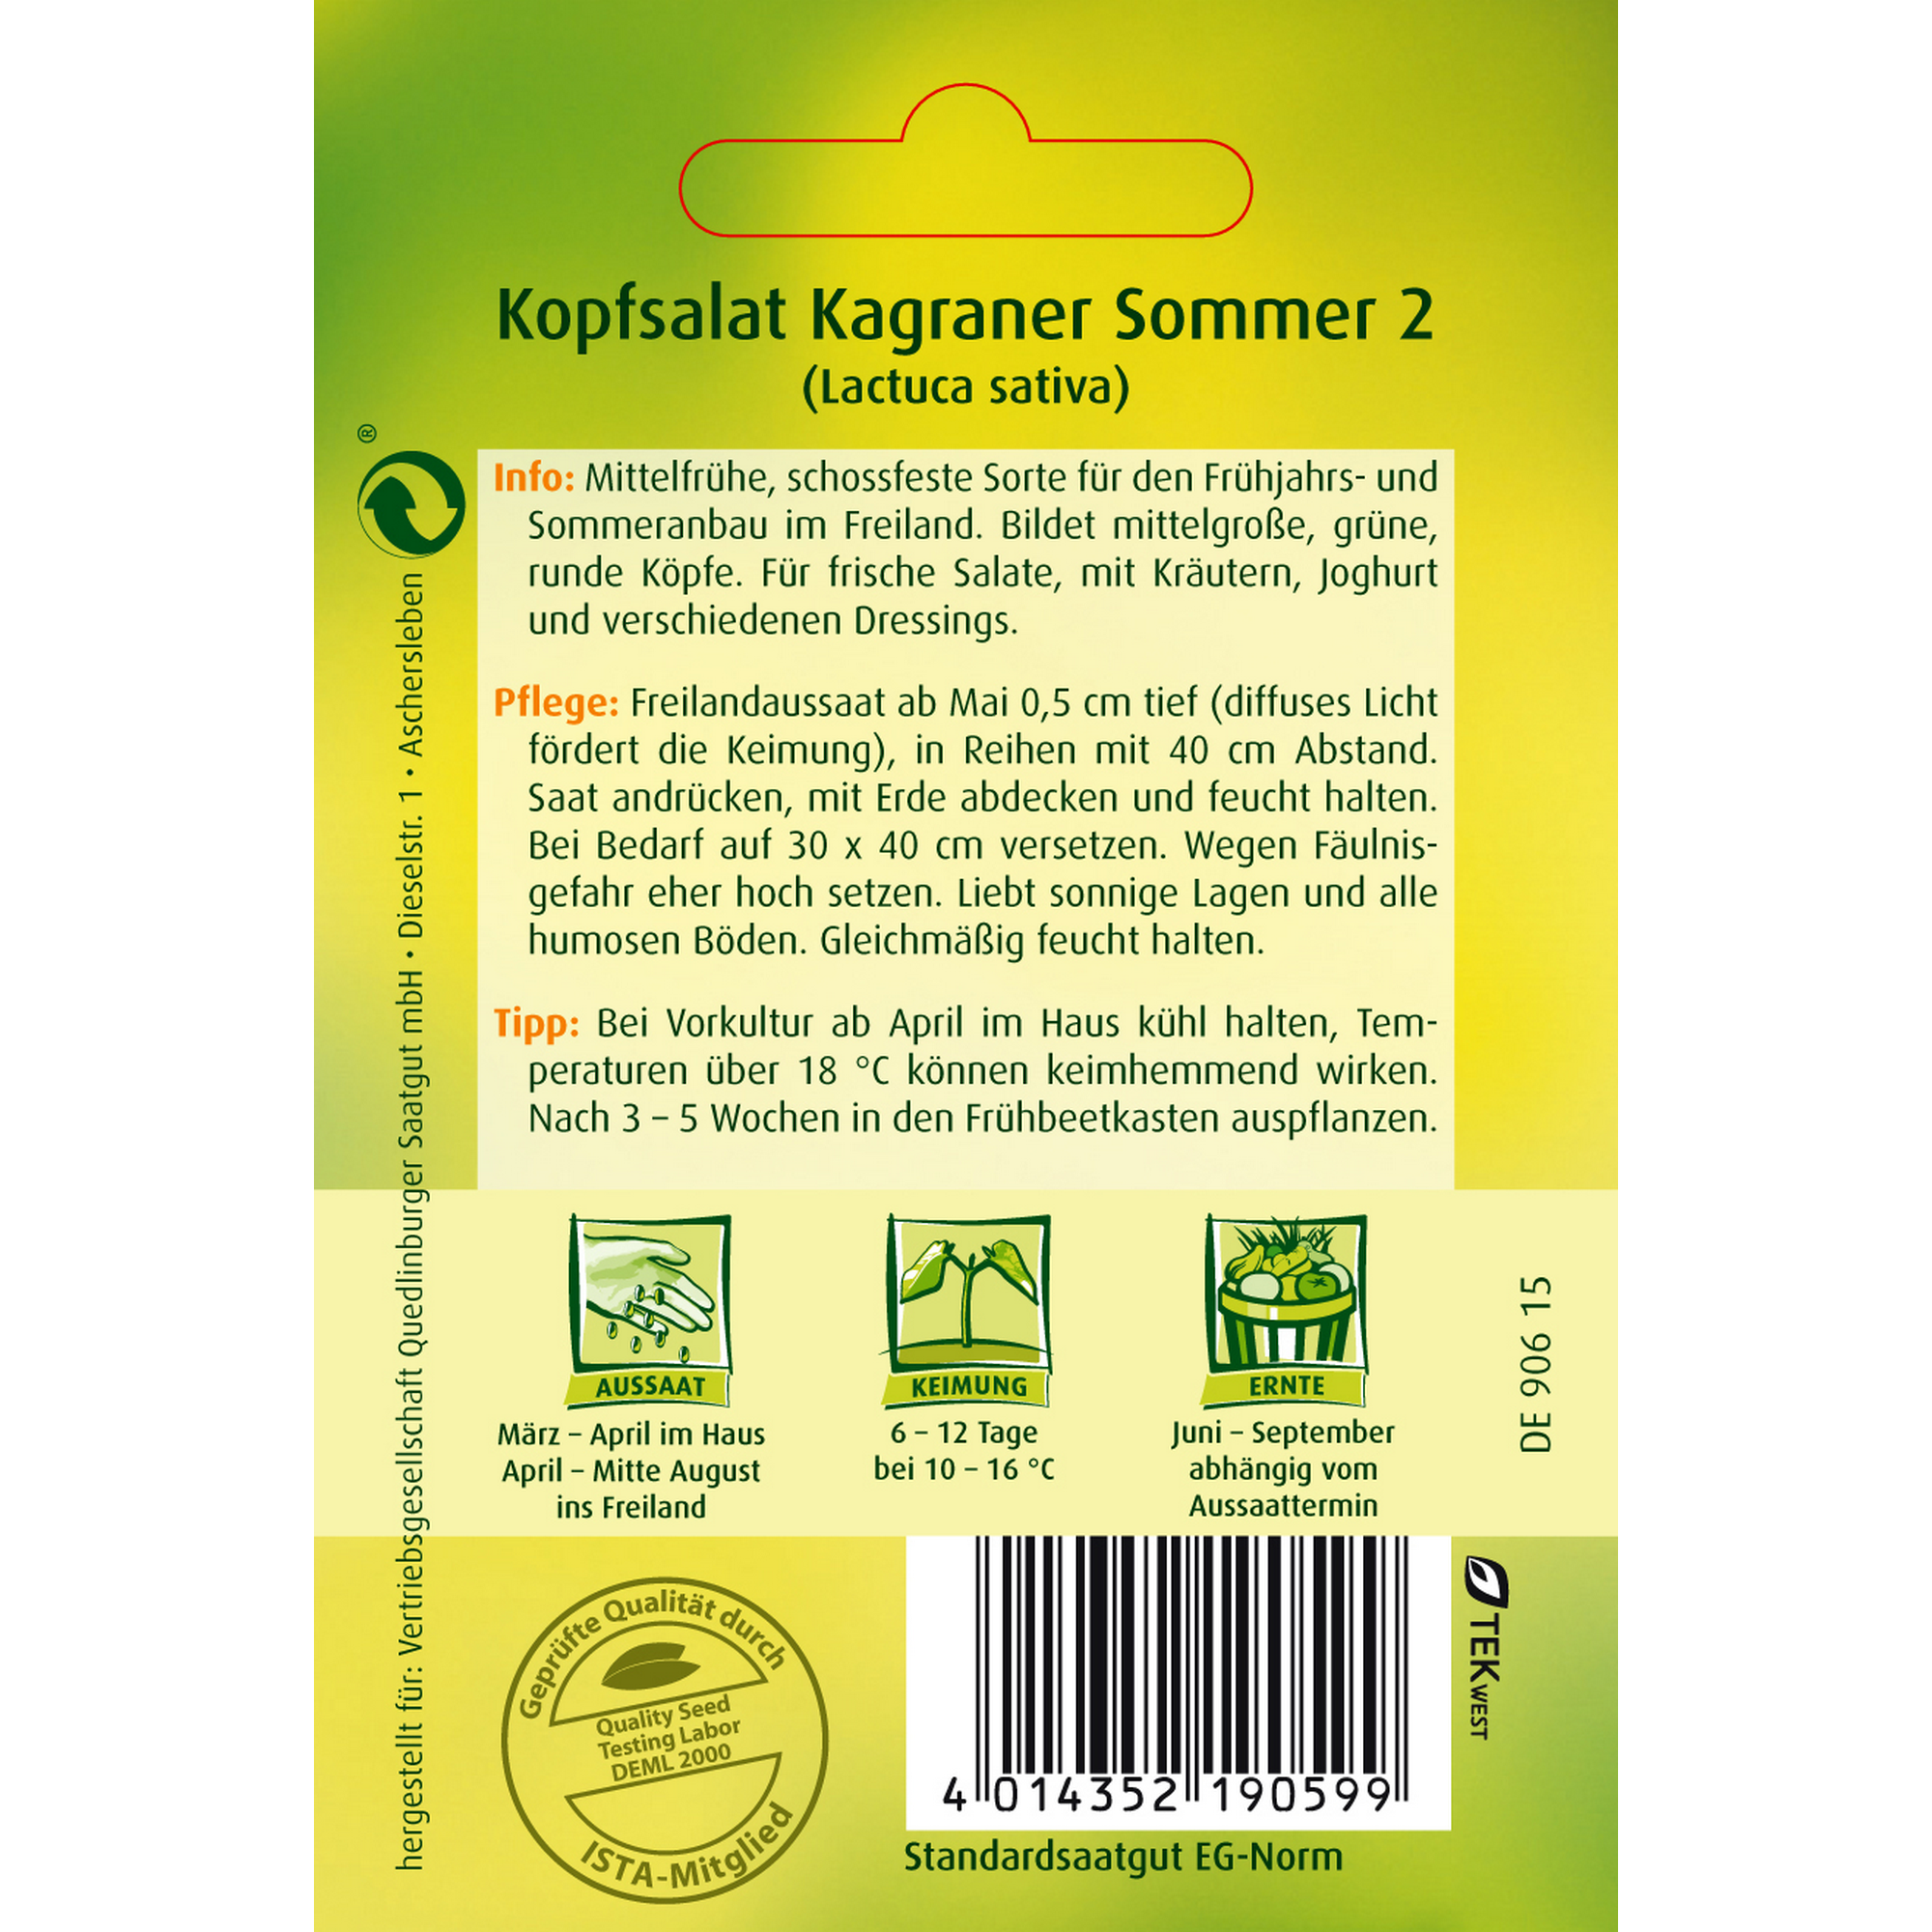 Kopfsalat 'Kagraner Sommer 2' + product picture